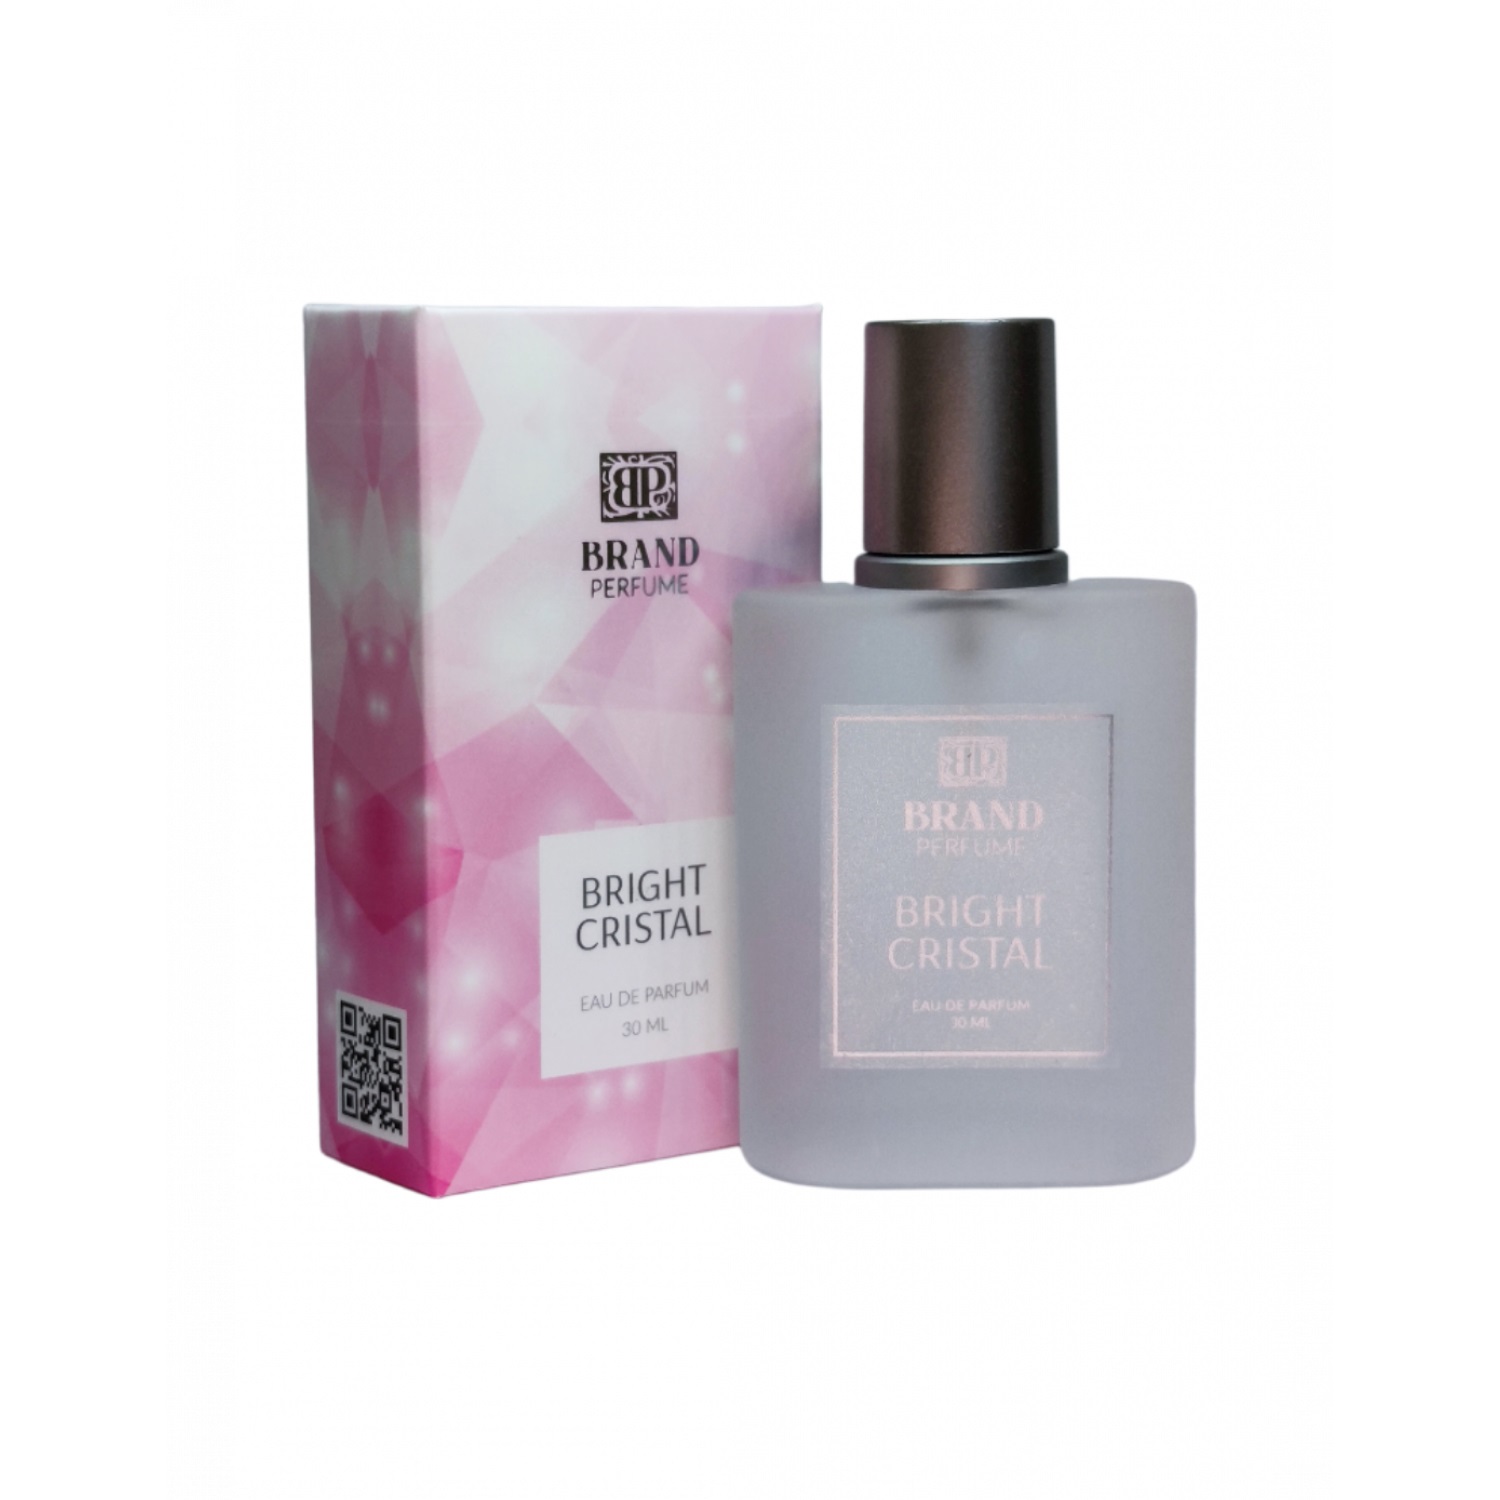 BRIGHT CRISTAL Eau De Parfum, Brand Perfume (Парфюмерная вода), спрей, 30 мл.